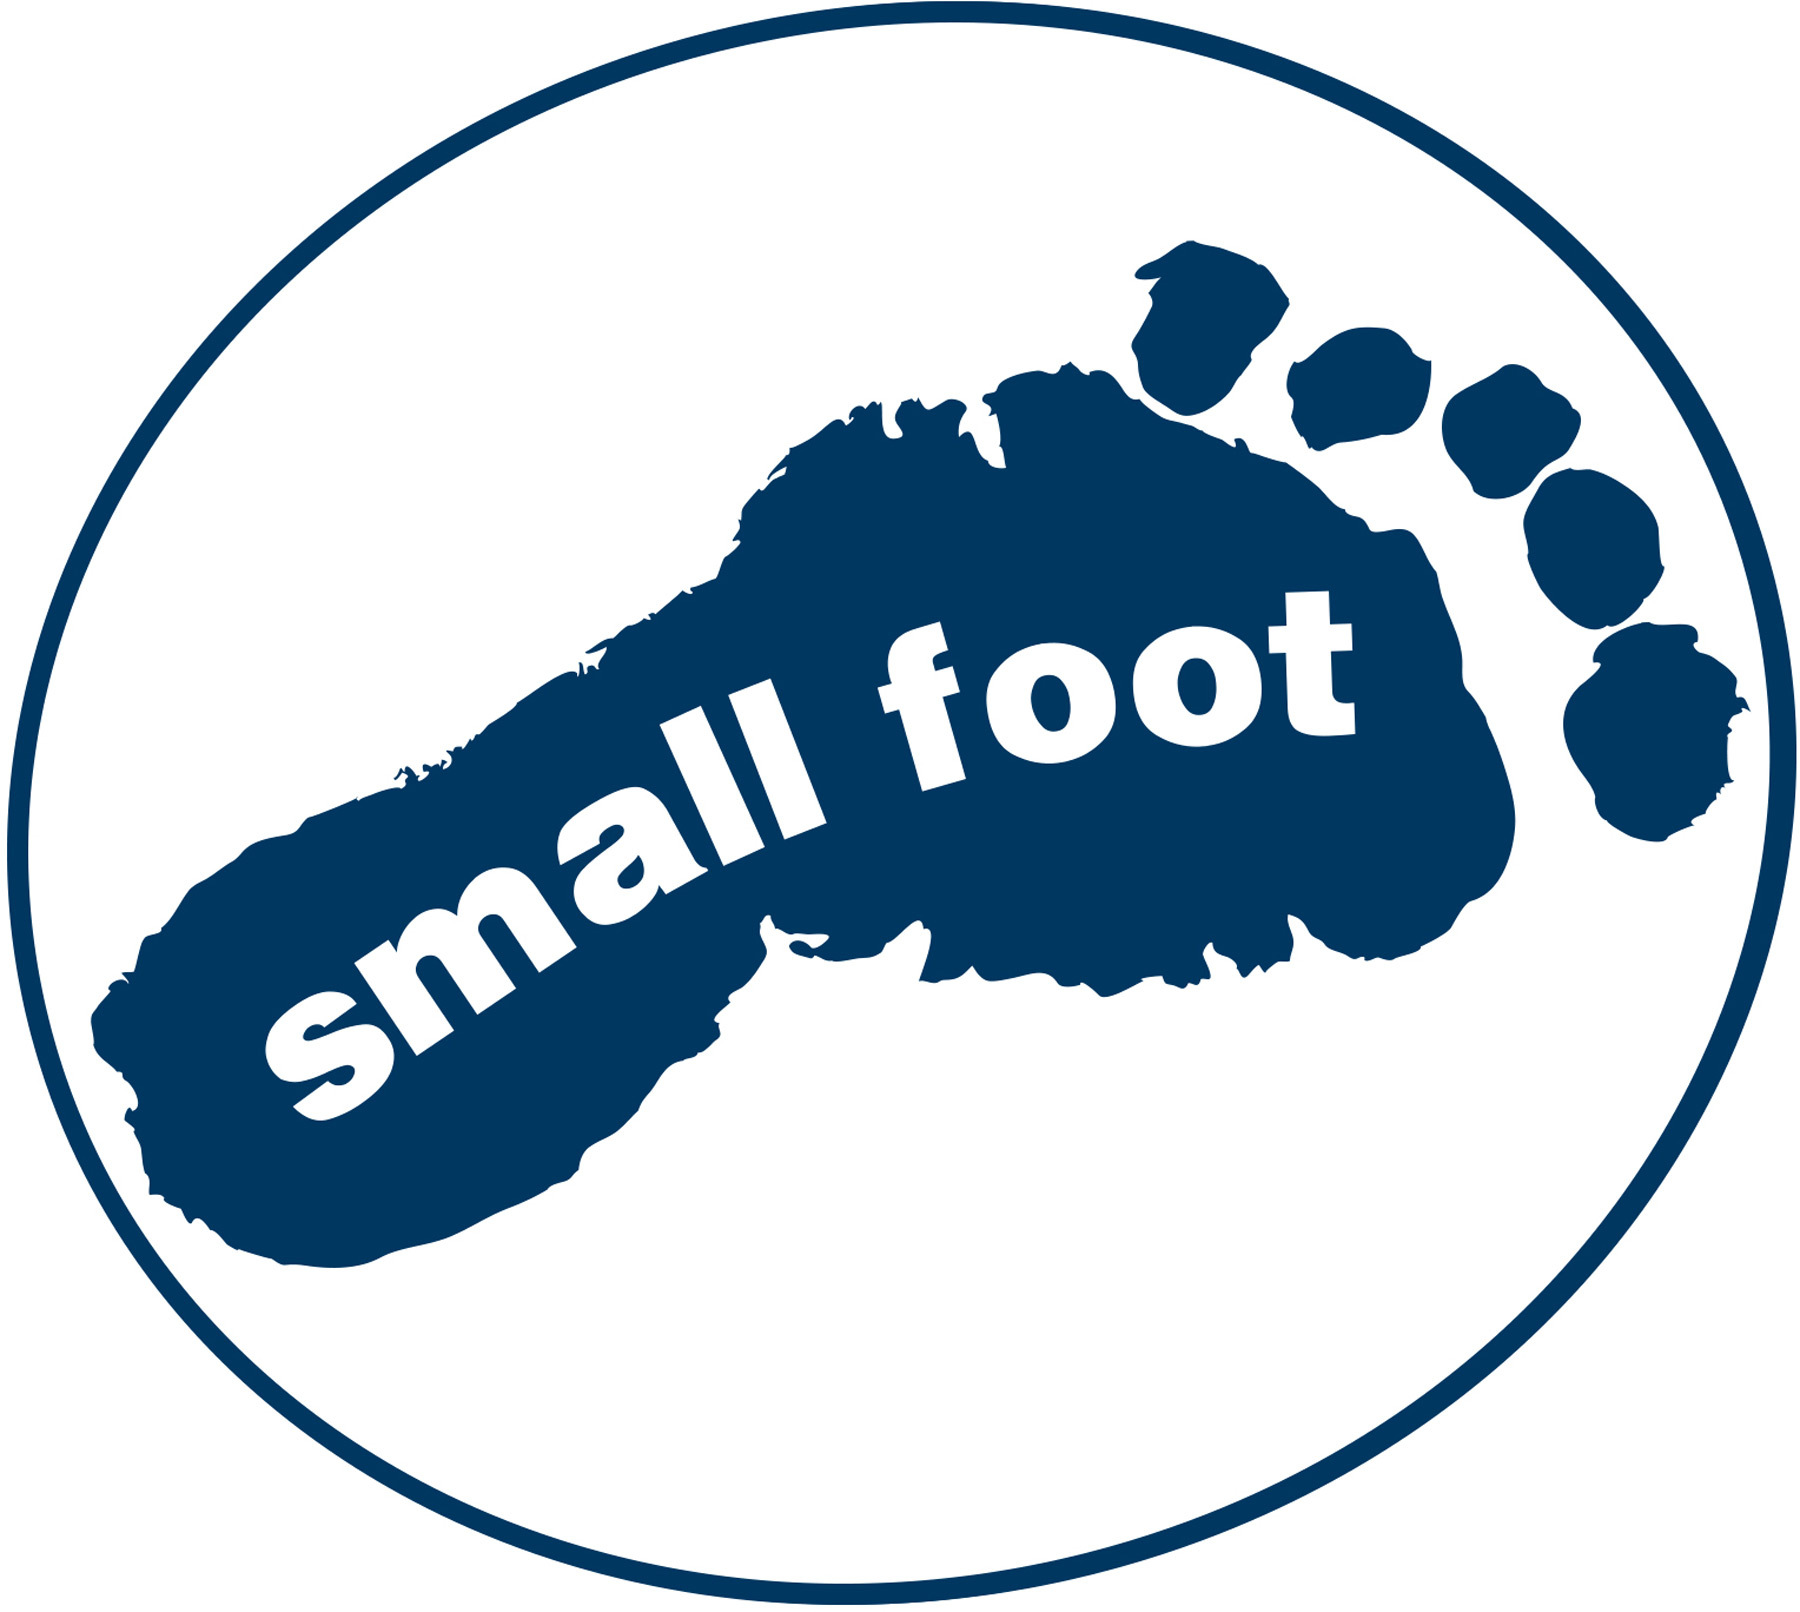 small_foot